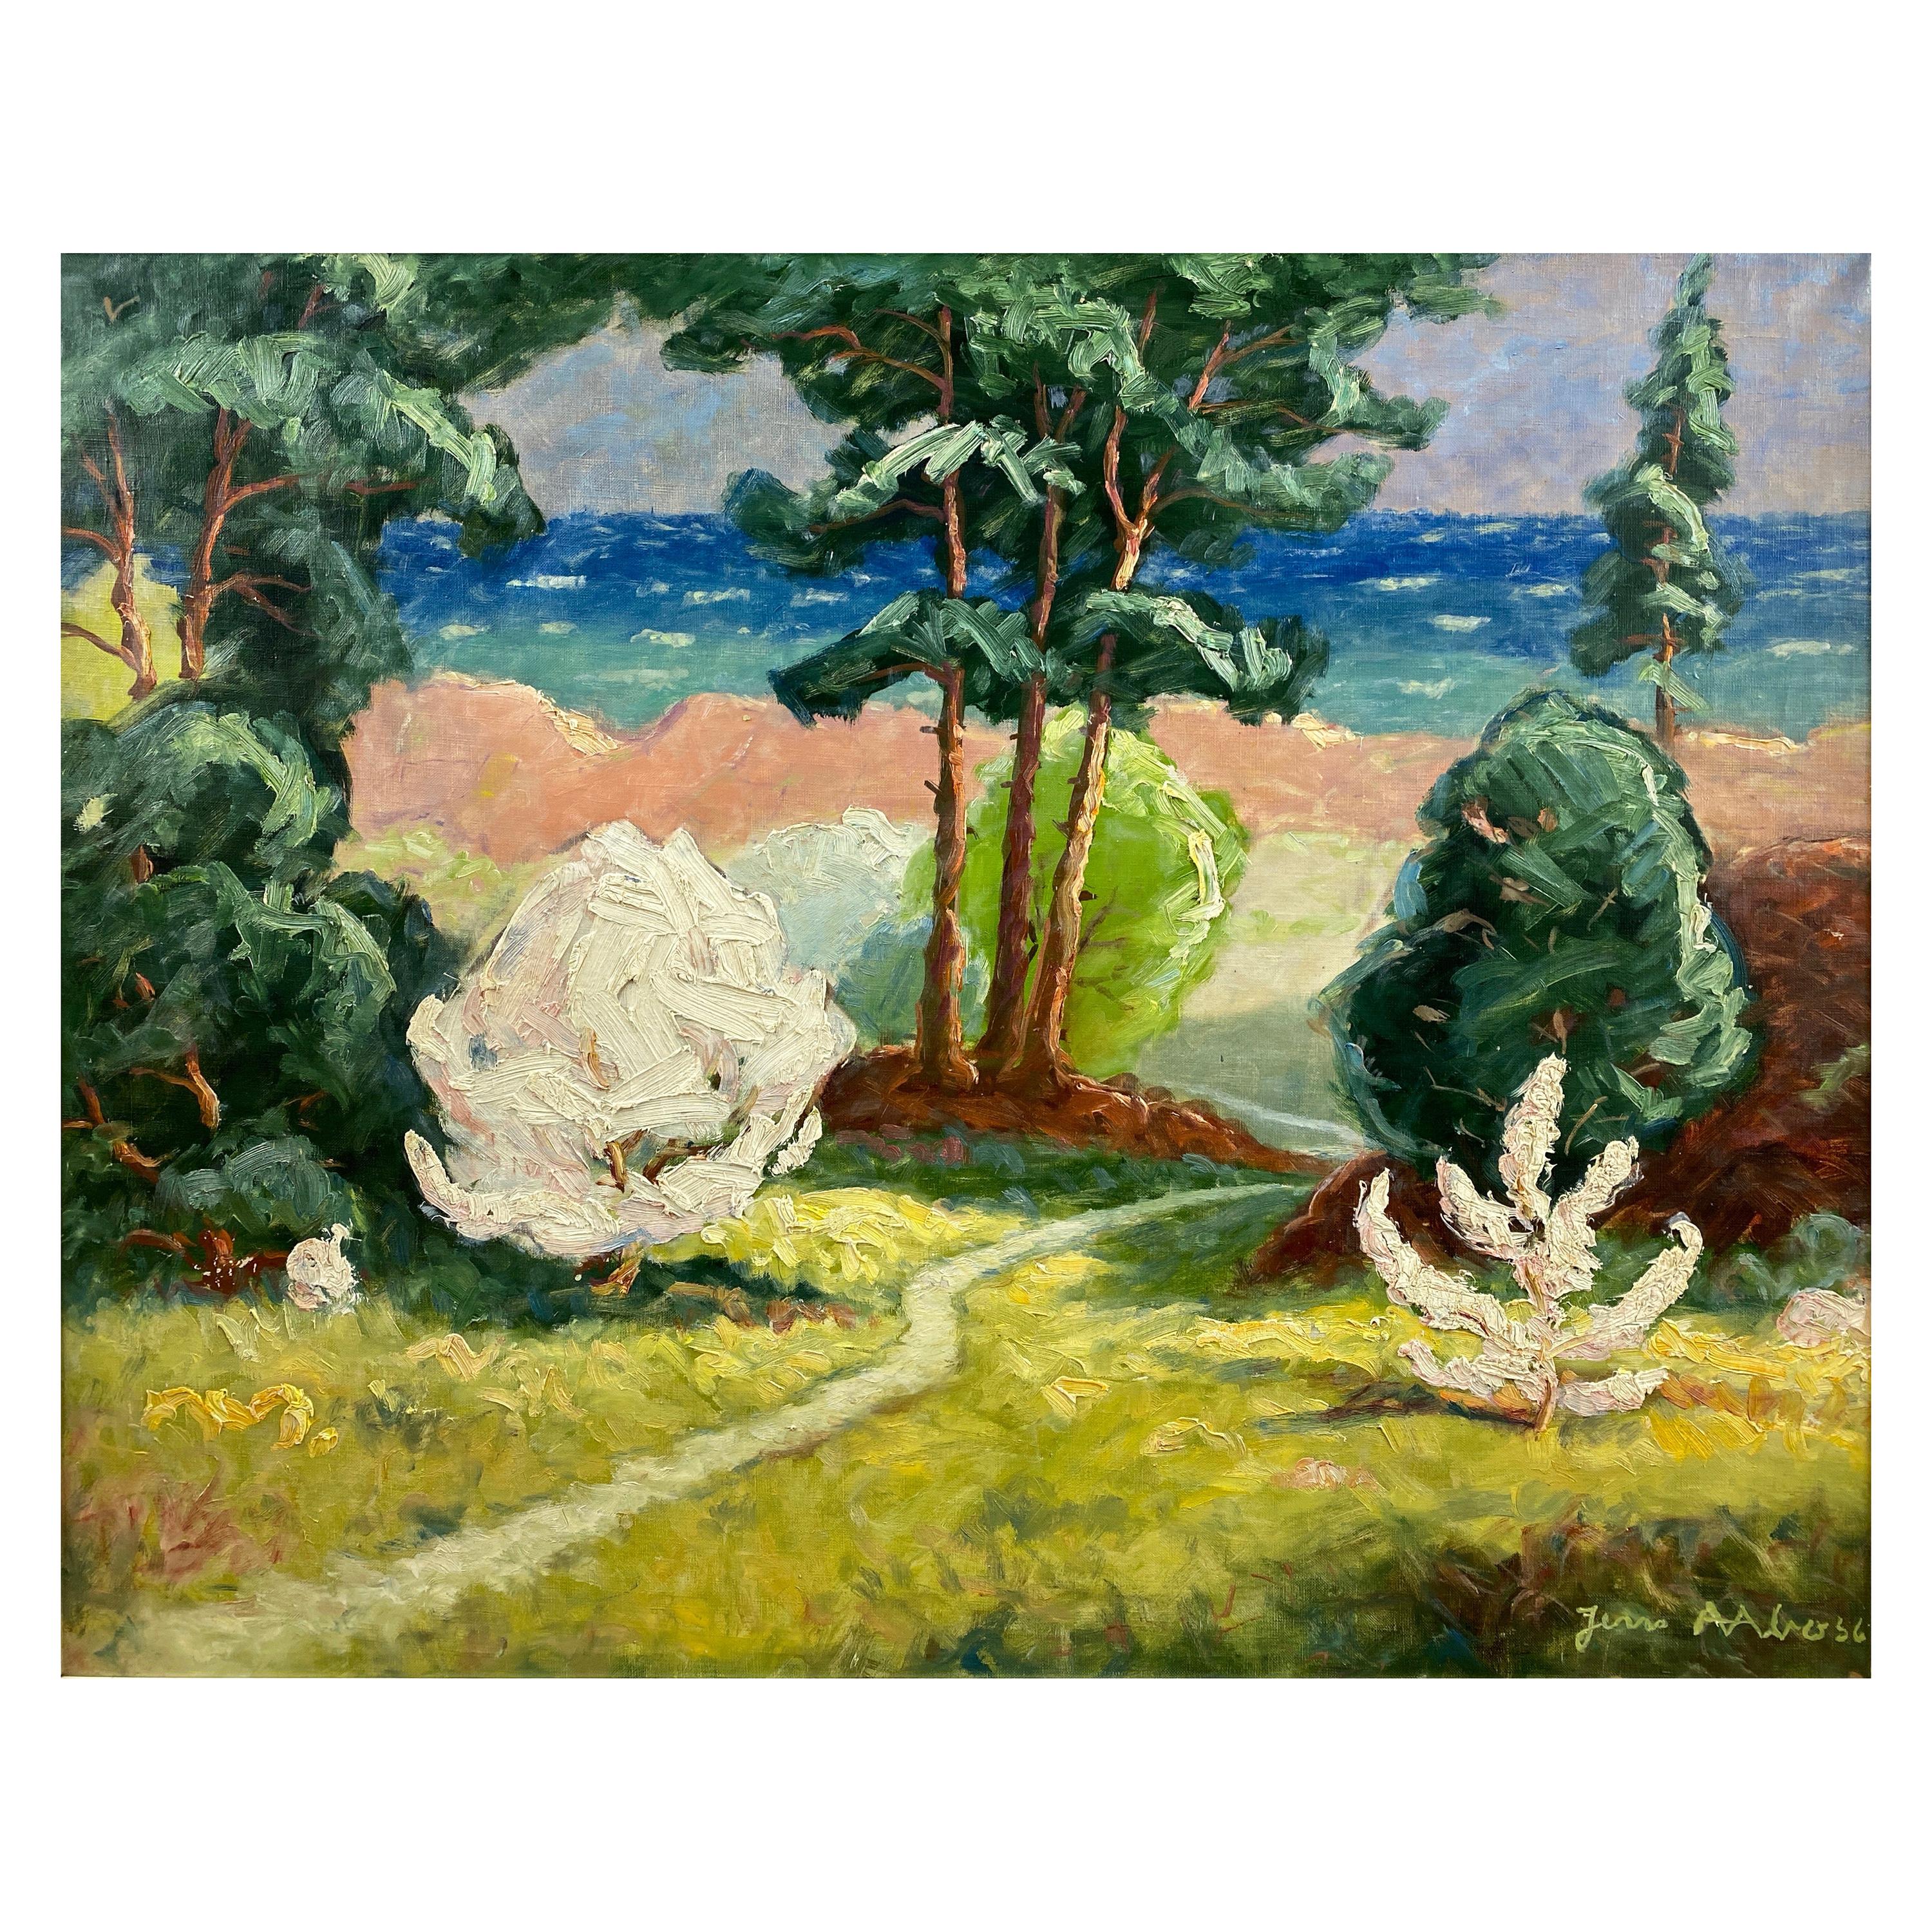 Jens Aabo “Danish Coastal Pathway”, Impressionist Oil Painting, 1956